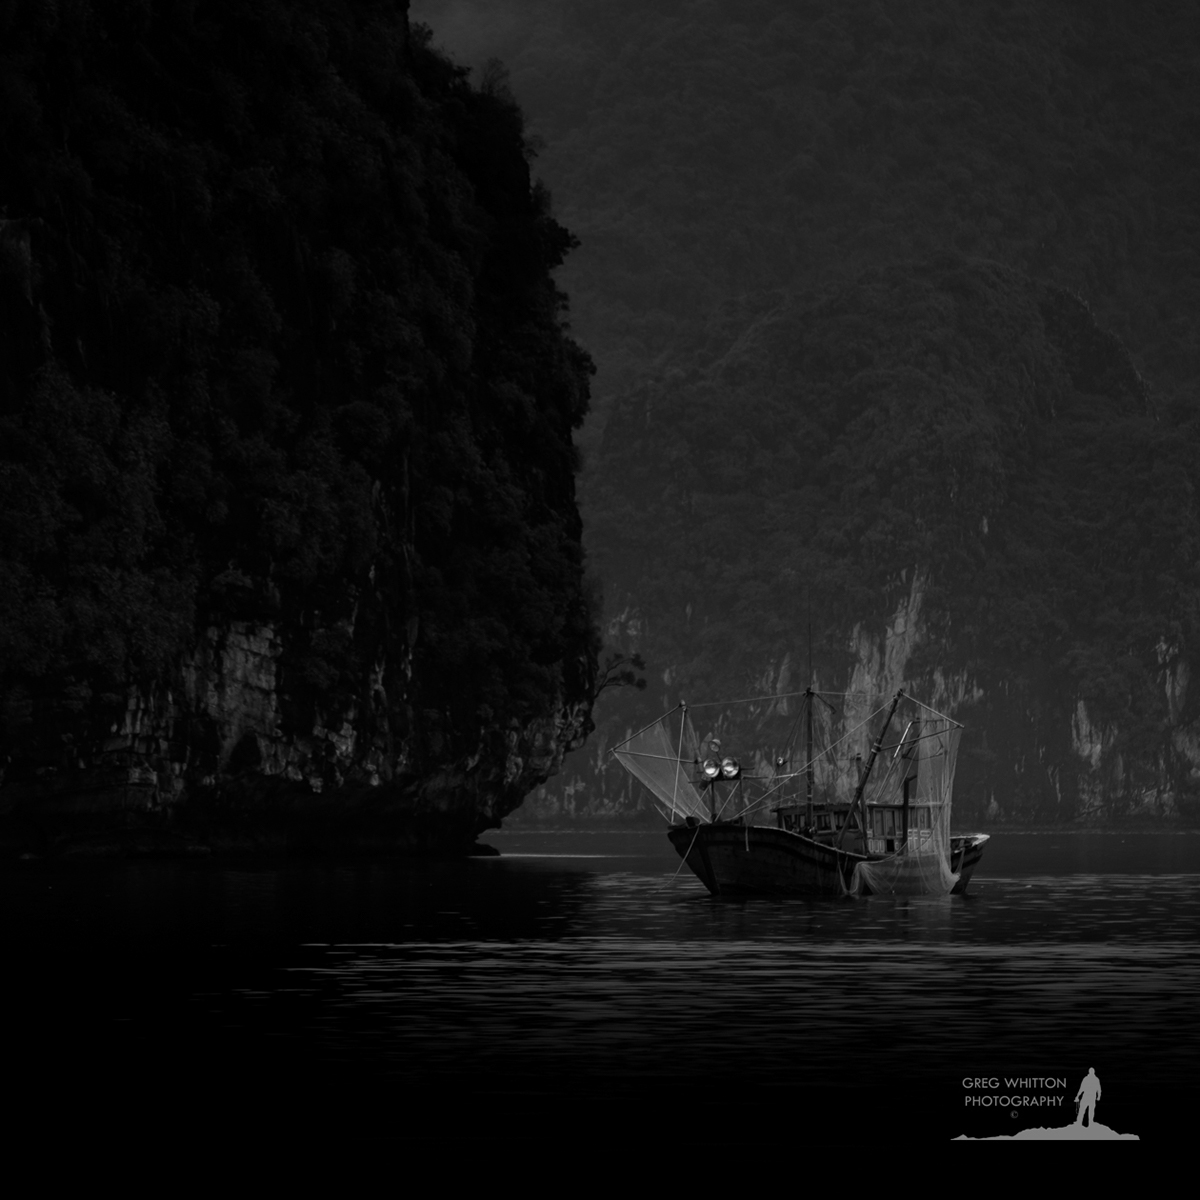 vietnam ha long bay Landscape seascape grain Mono black and white monochrome asia fishing Travel